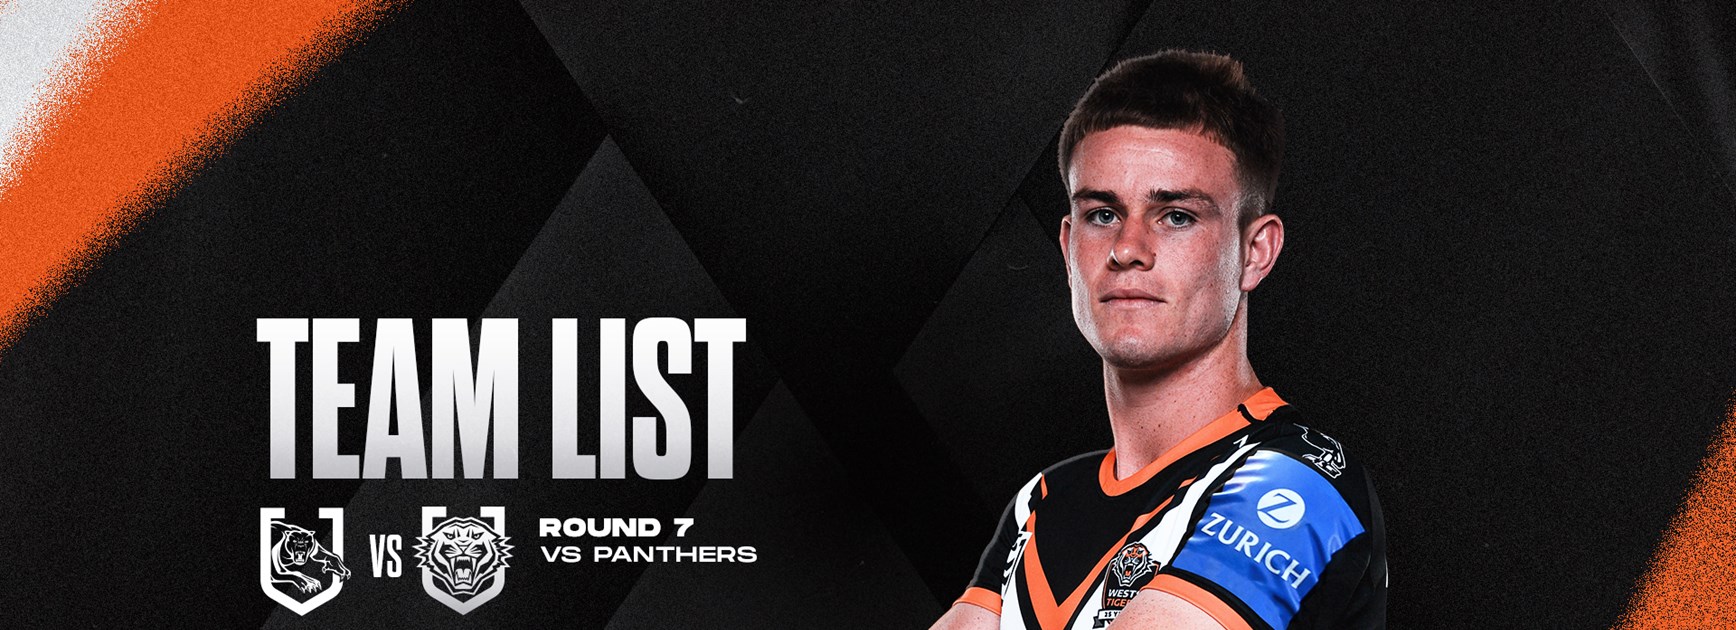 Team List: NRL Round 7 vs Panthers